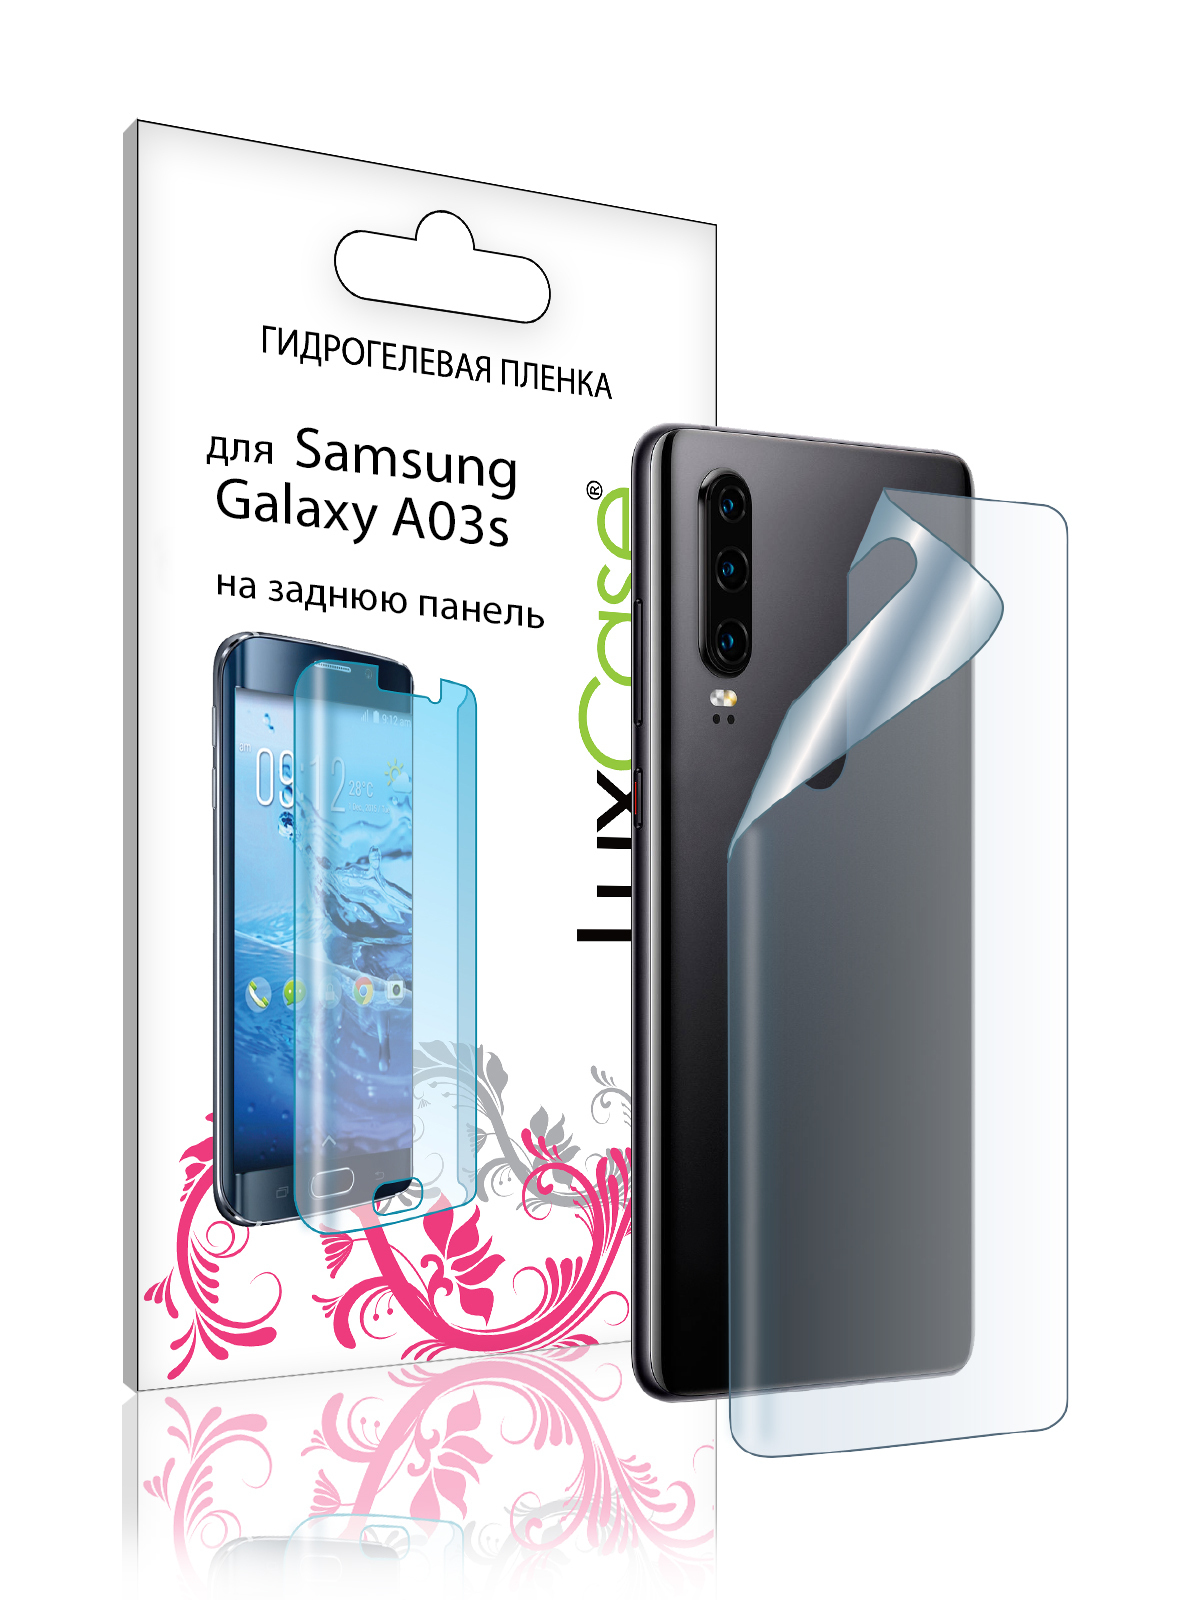 гидрогелевая пленка luxcase для samsung galaxy a03s 0 14mm transparent back 89727 Гидрогелевая пленка LuxCase для Samsung Galaxy A03s 0.14mm Transparent Back 89727